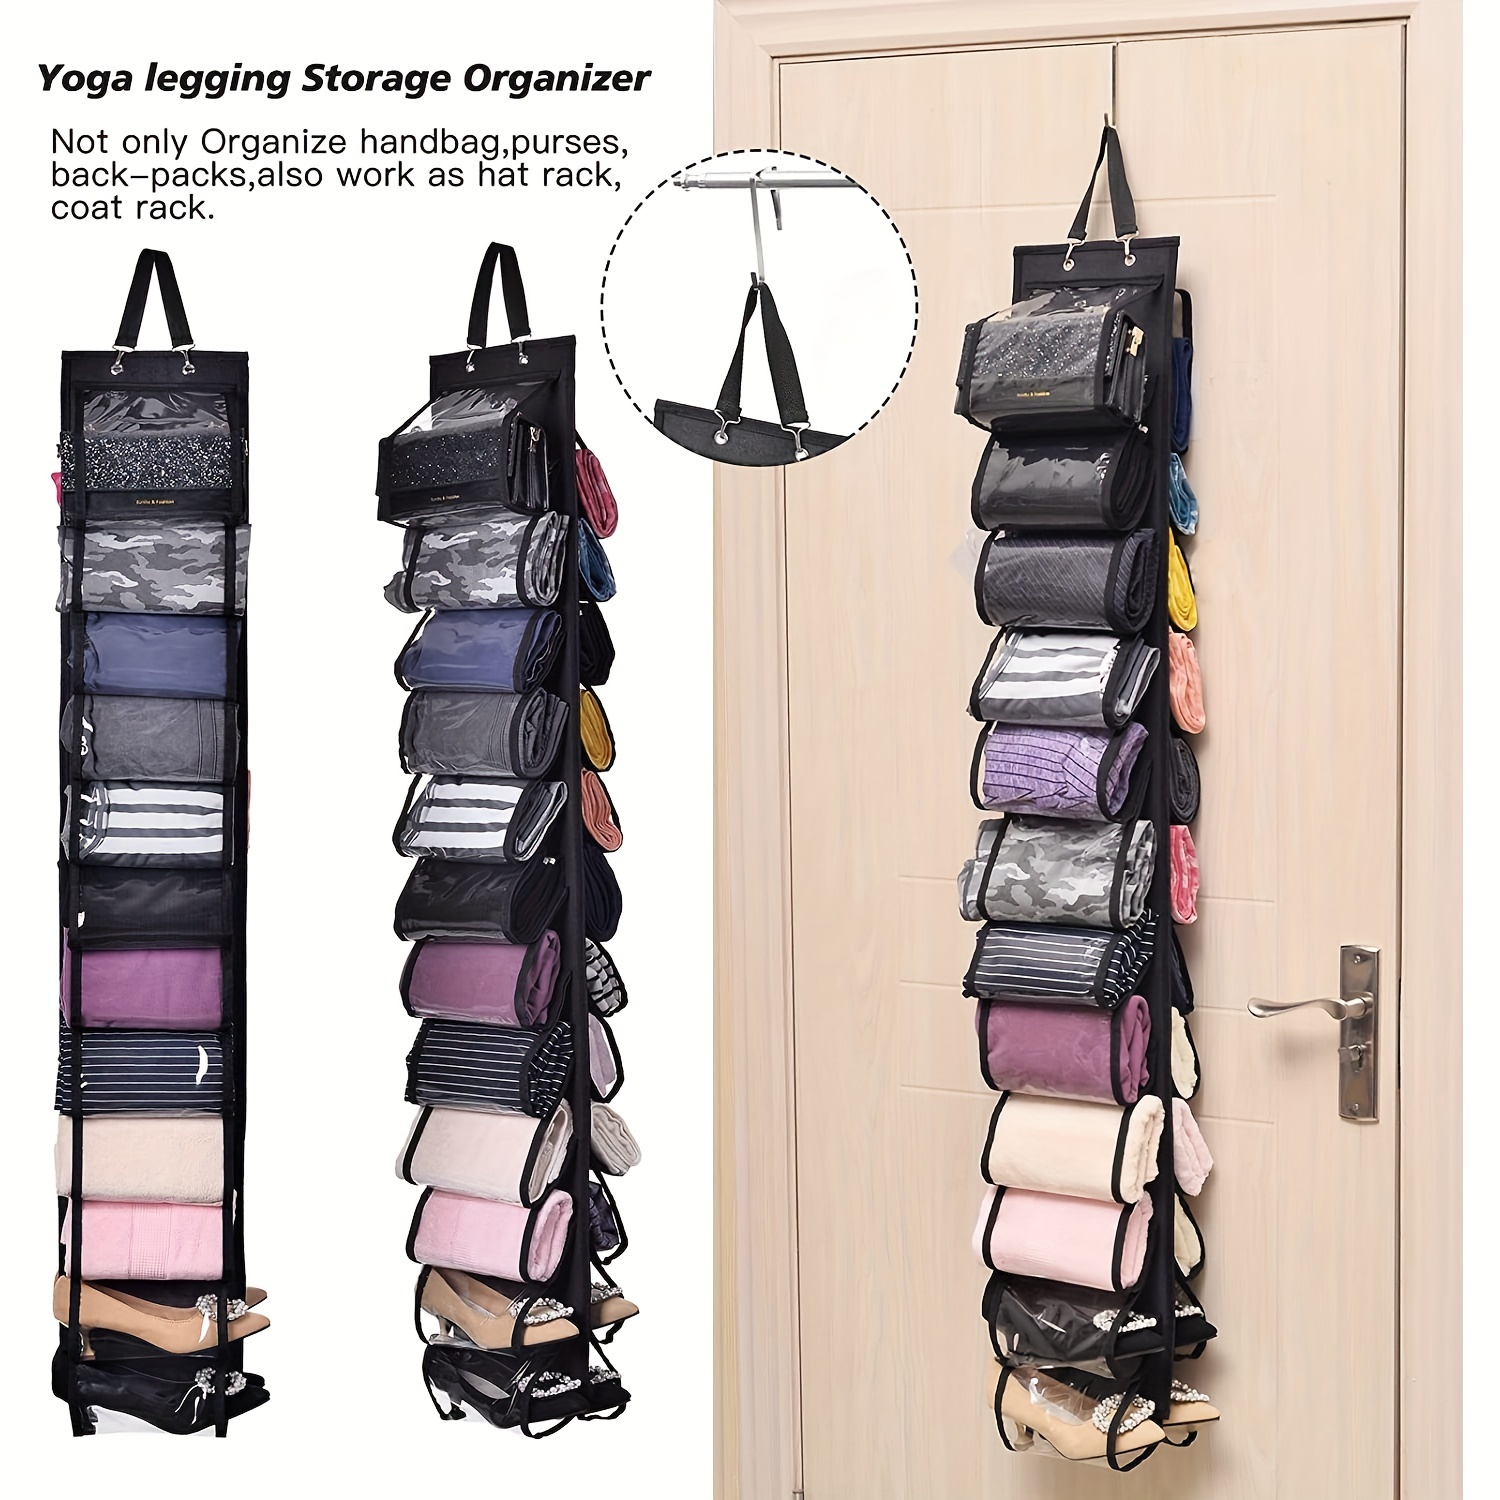  2 Pack Legging Hanging Storage Organizer, HUNTALG Yoga Leggings  Space Saving Bag Storage Hanger with 24 Compartment, Foldable Clothes  Closets Roll Holder for T-Shirt, Towel, Legging, Jean (Black) : Home 